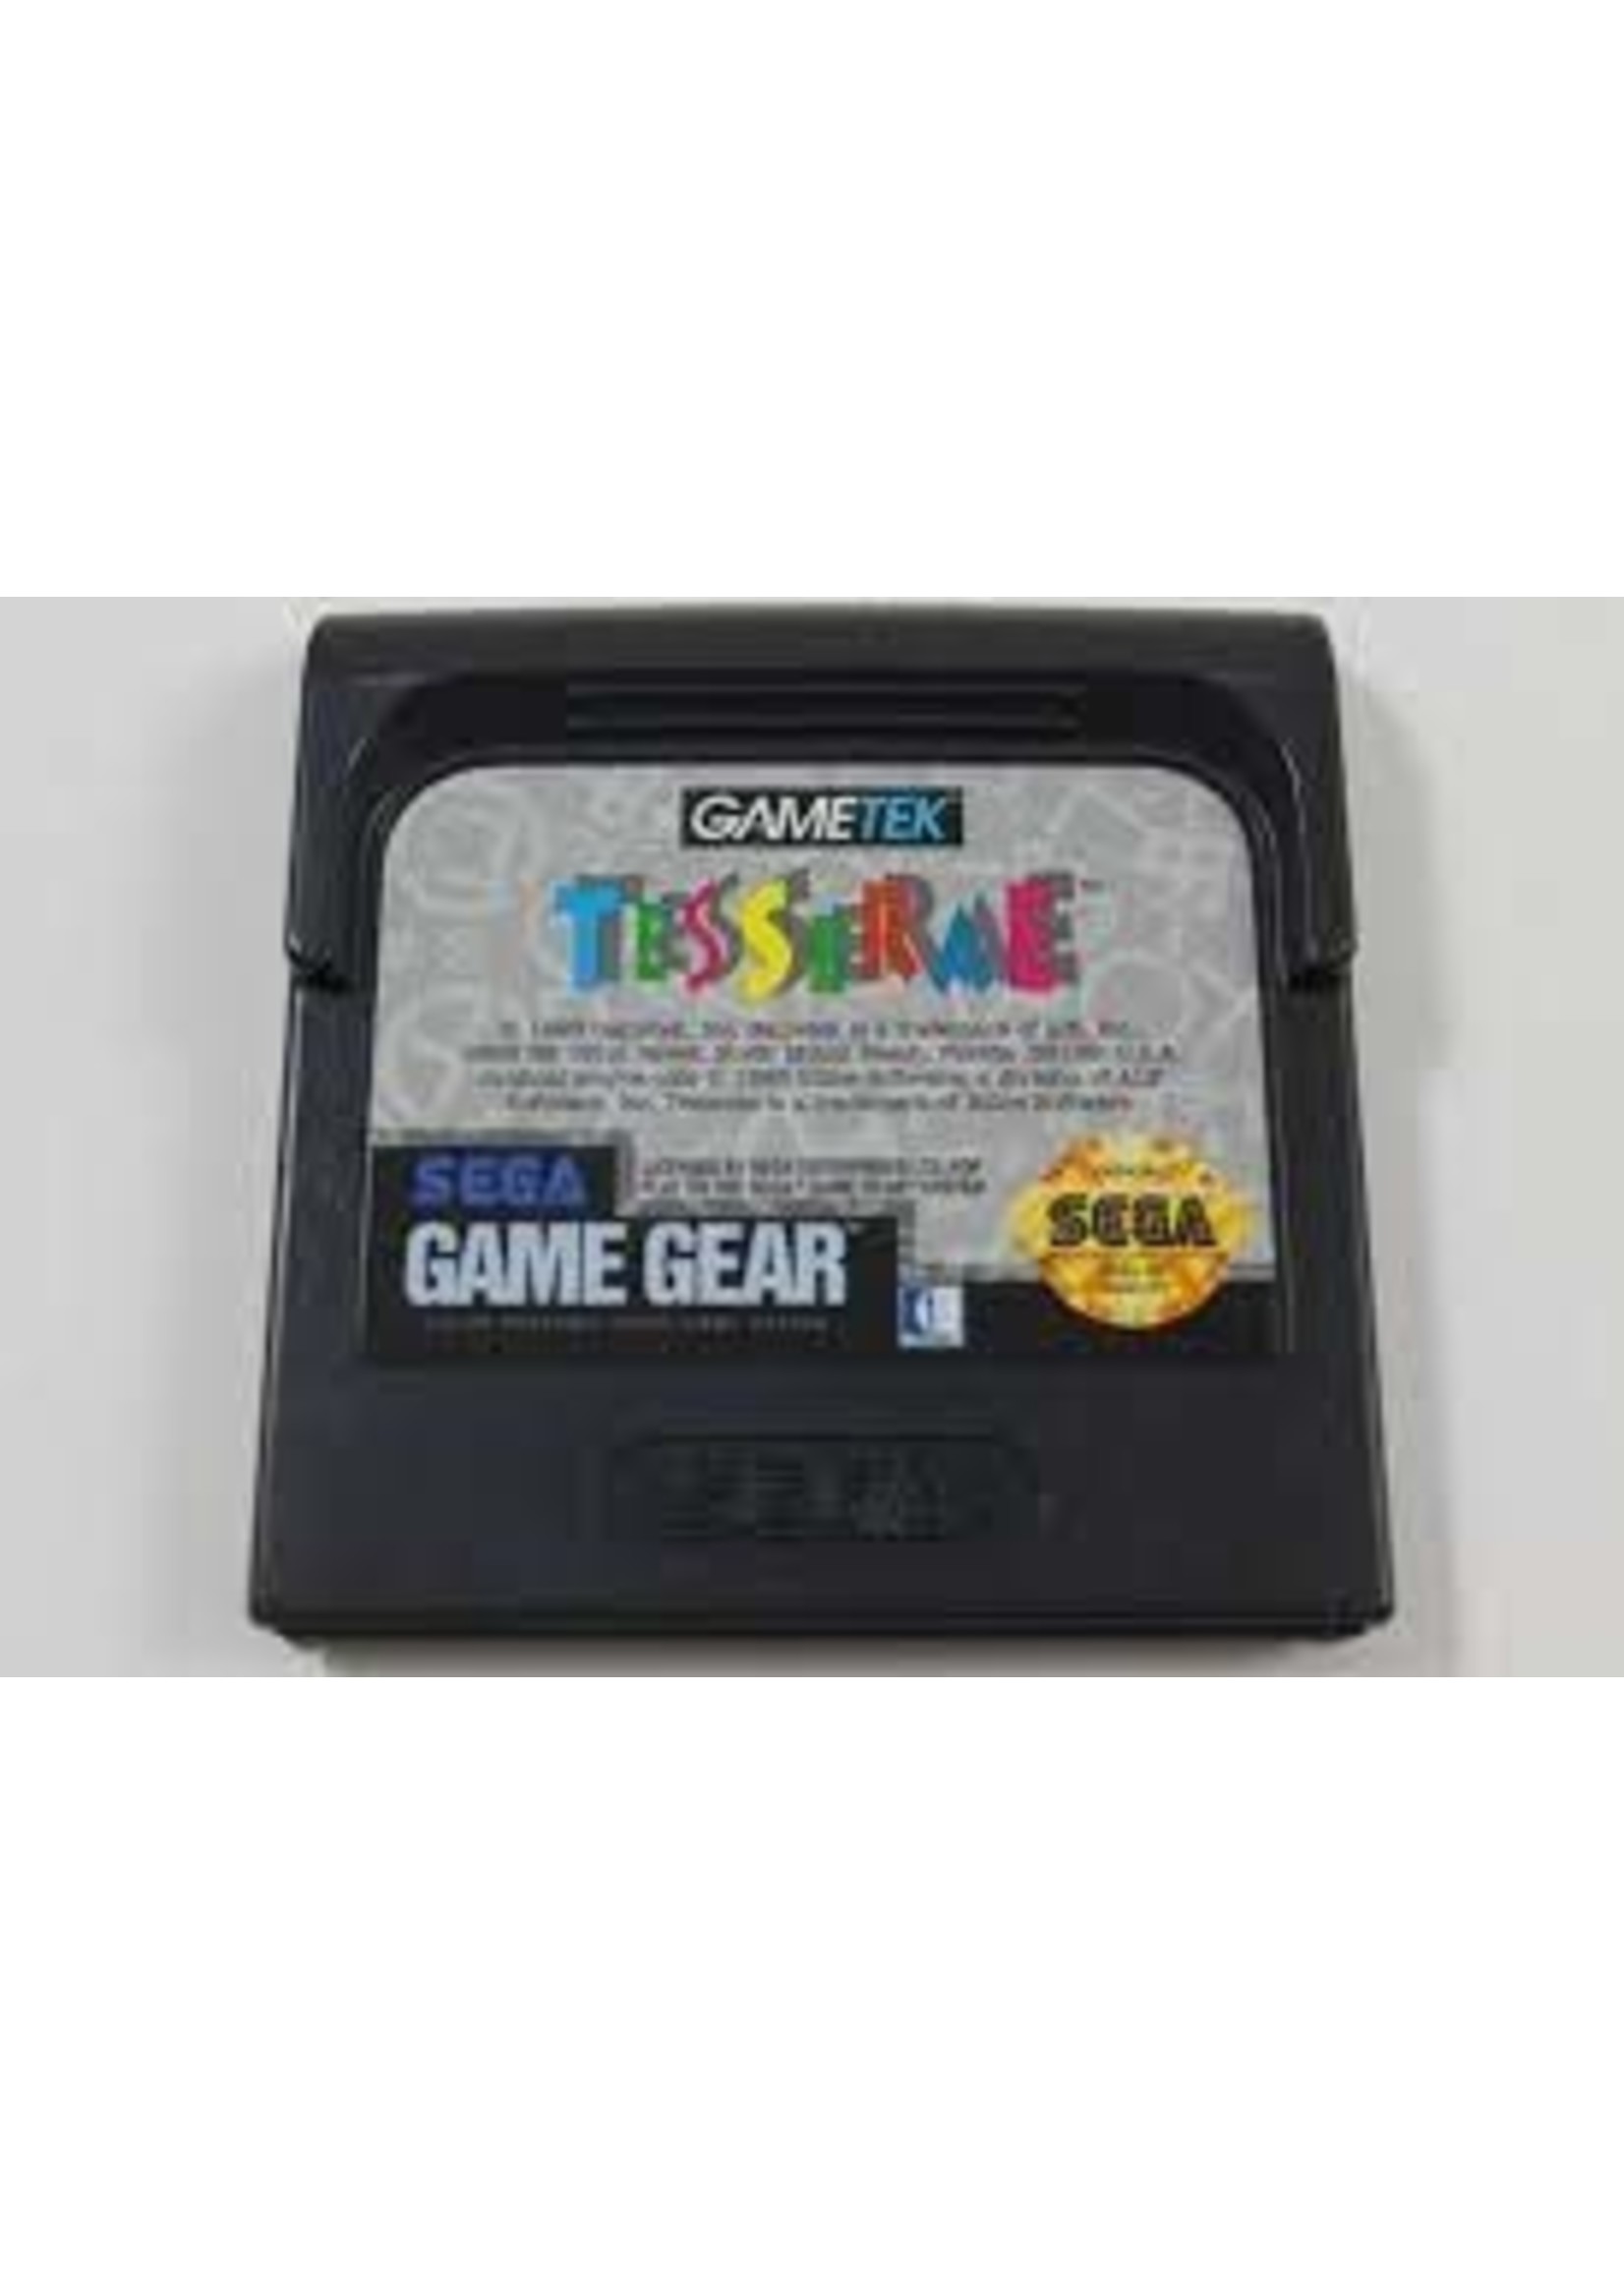 Sega Game Gear Tesserae